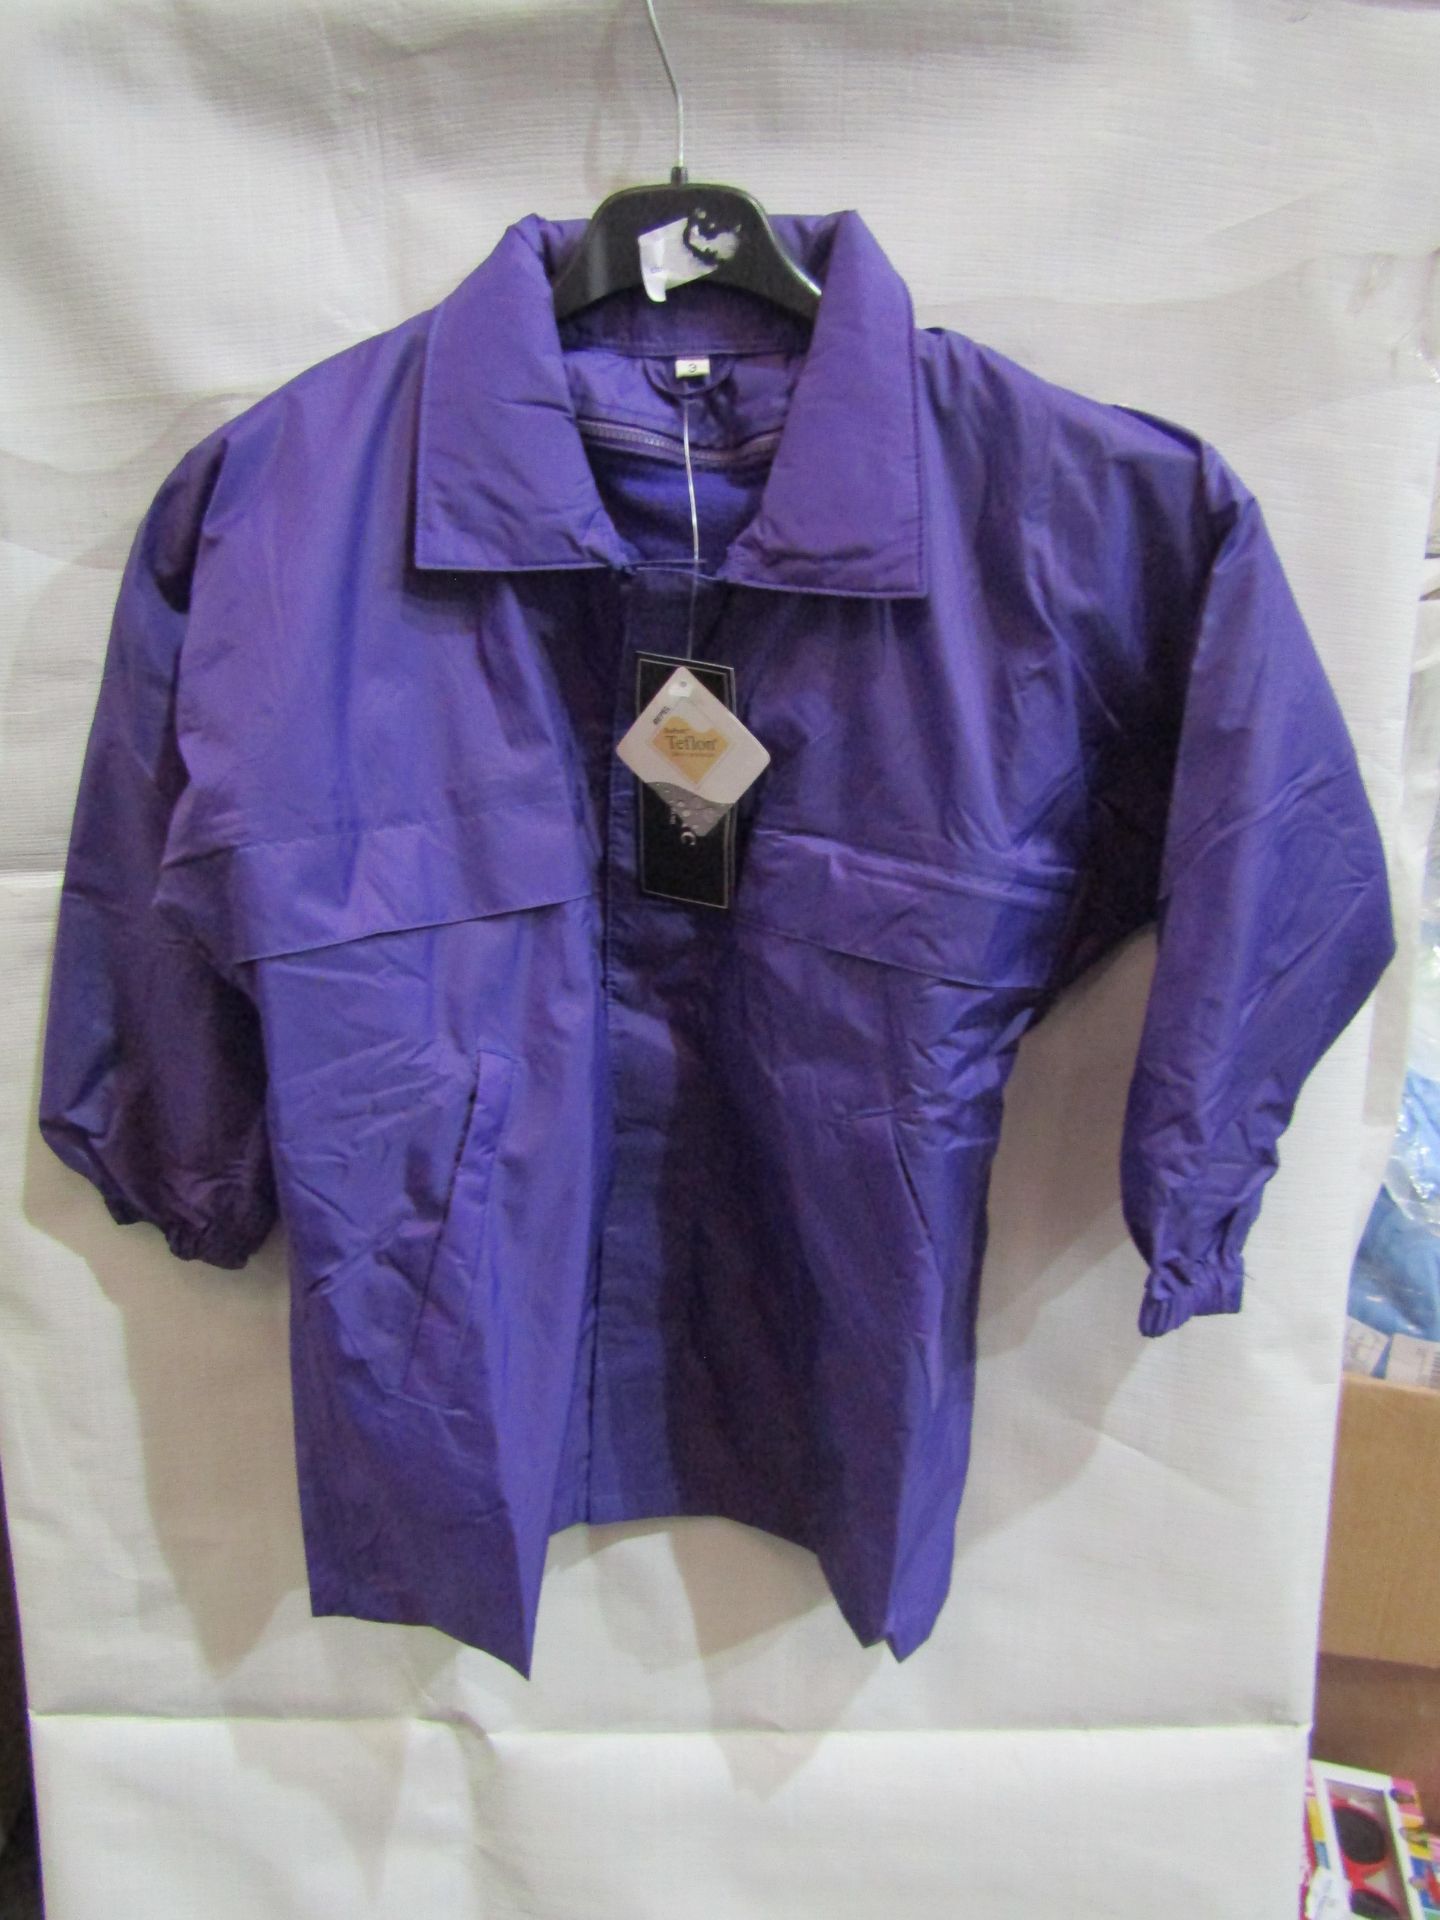 Rainmac Childrens Purple Thin Rain Coat, Size: 3 - Unused & Packaged.